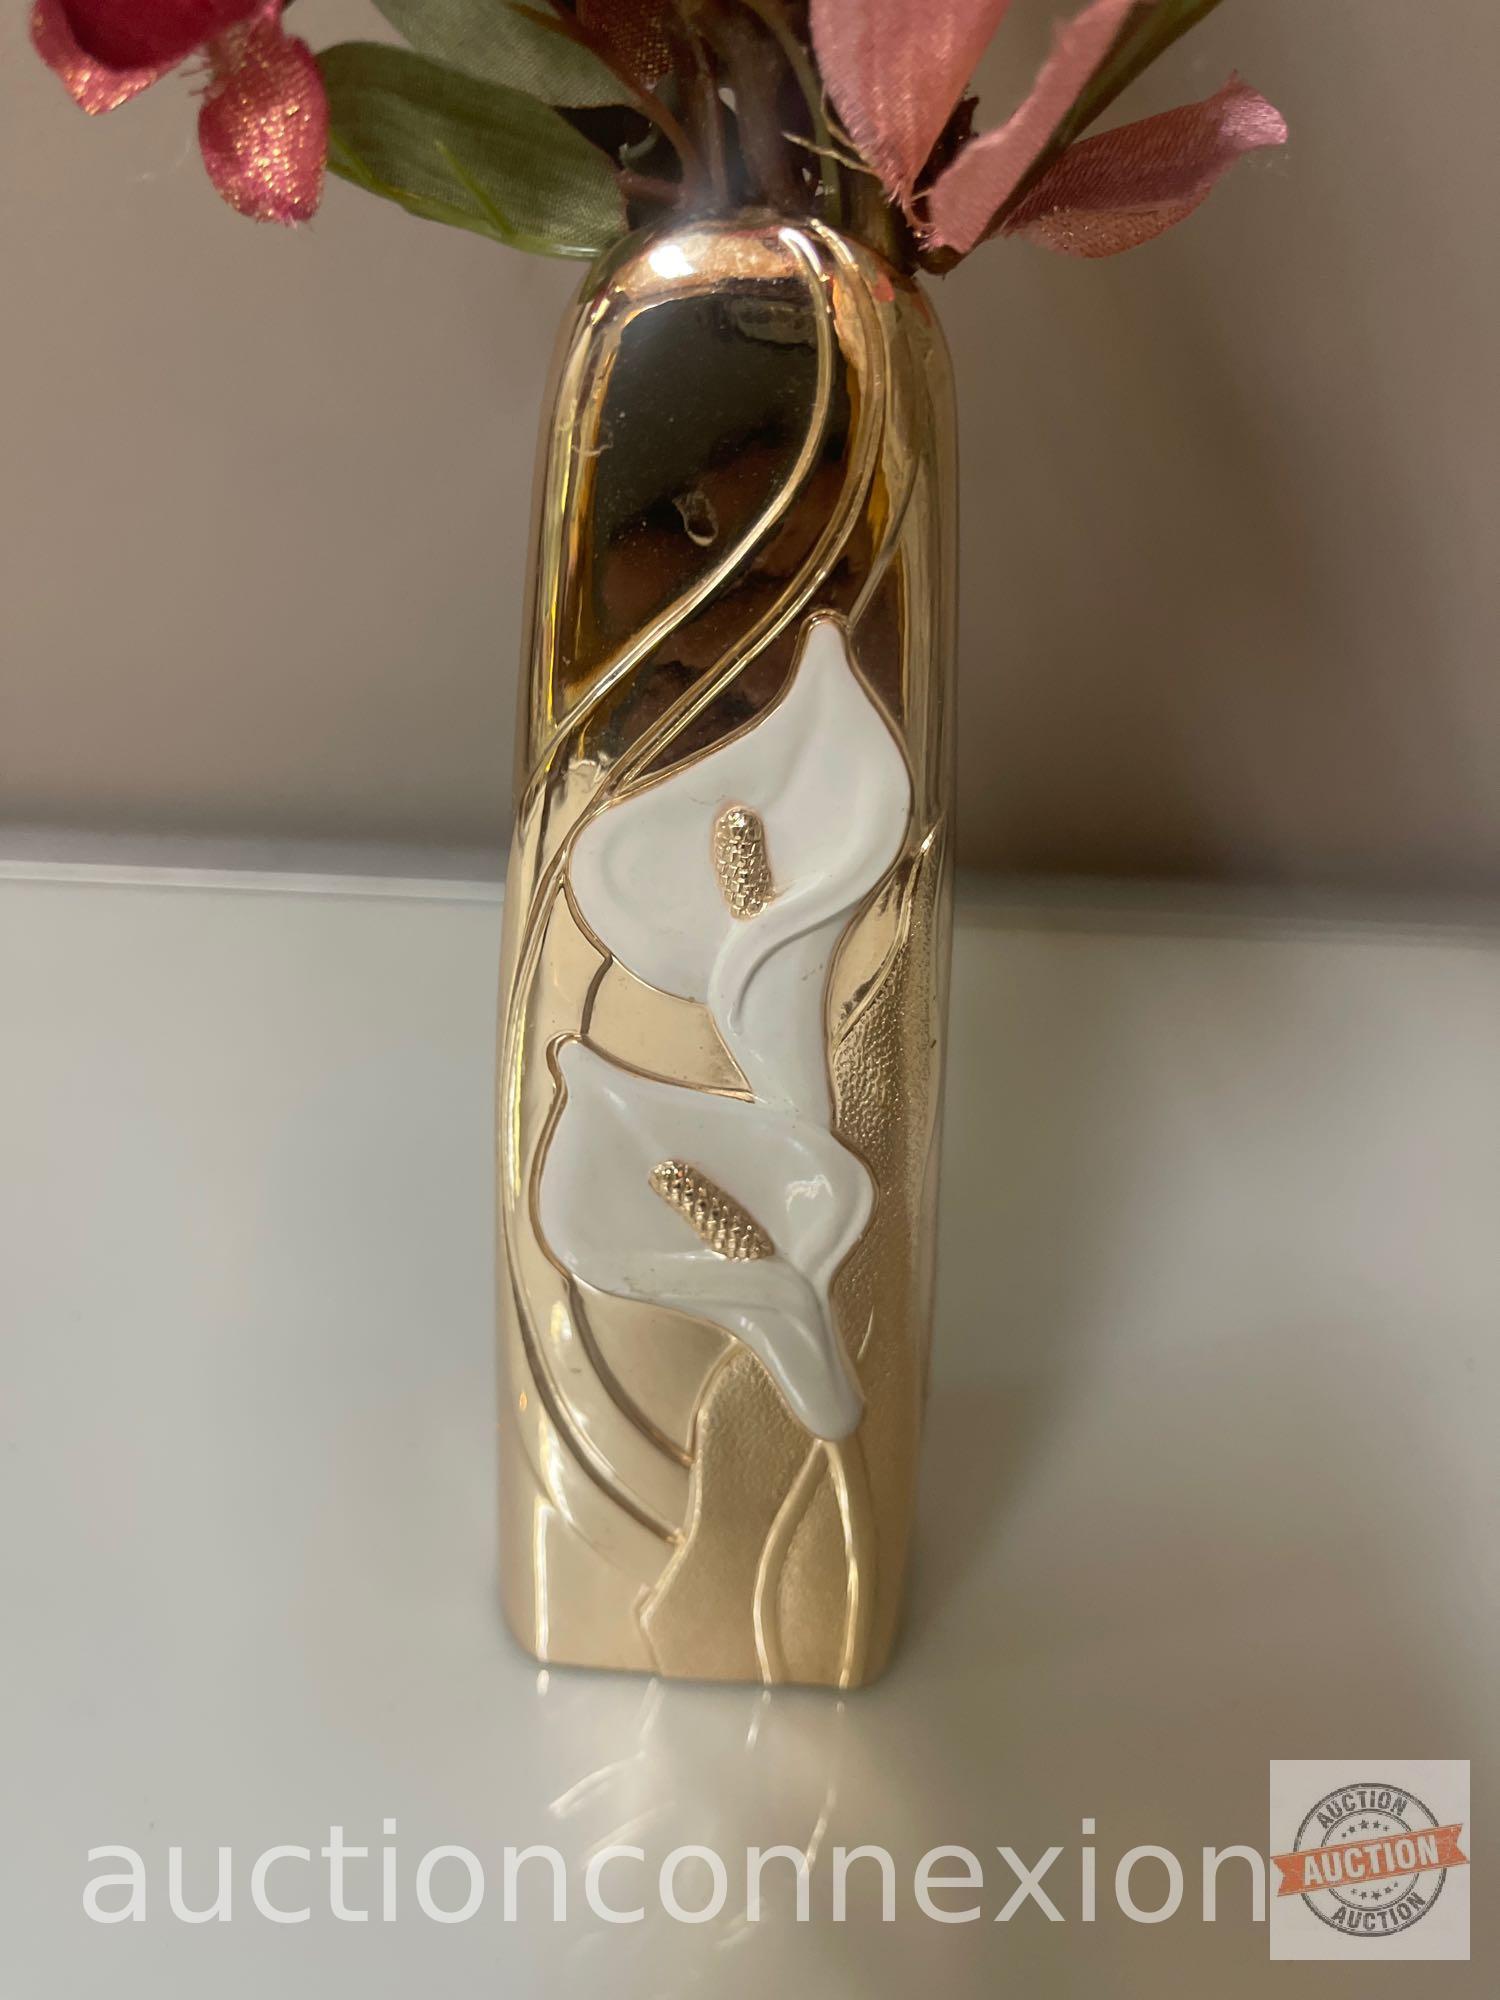 2 Asian motif vases - Goldimari Hand painted w/ birds 9.5"h & Metal Calla Lily motif